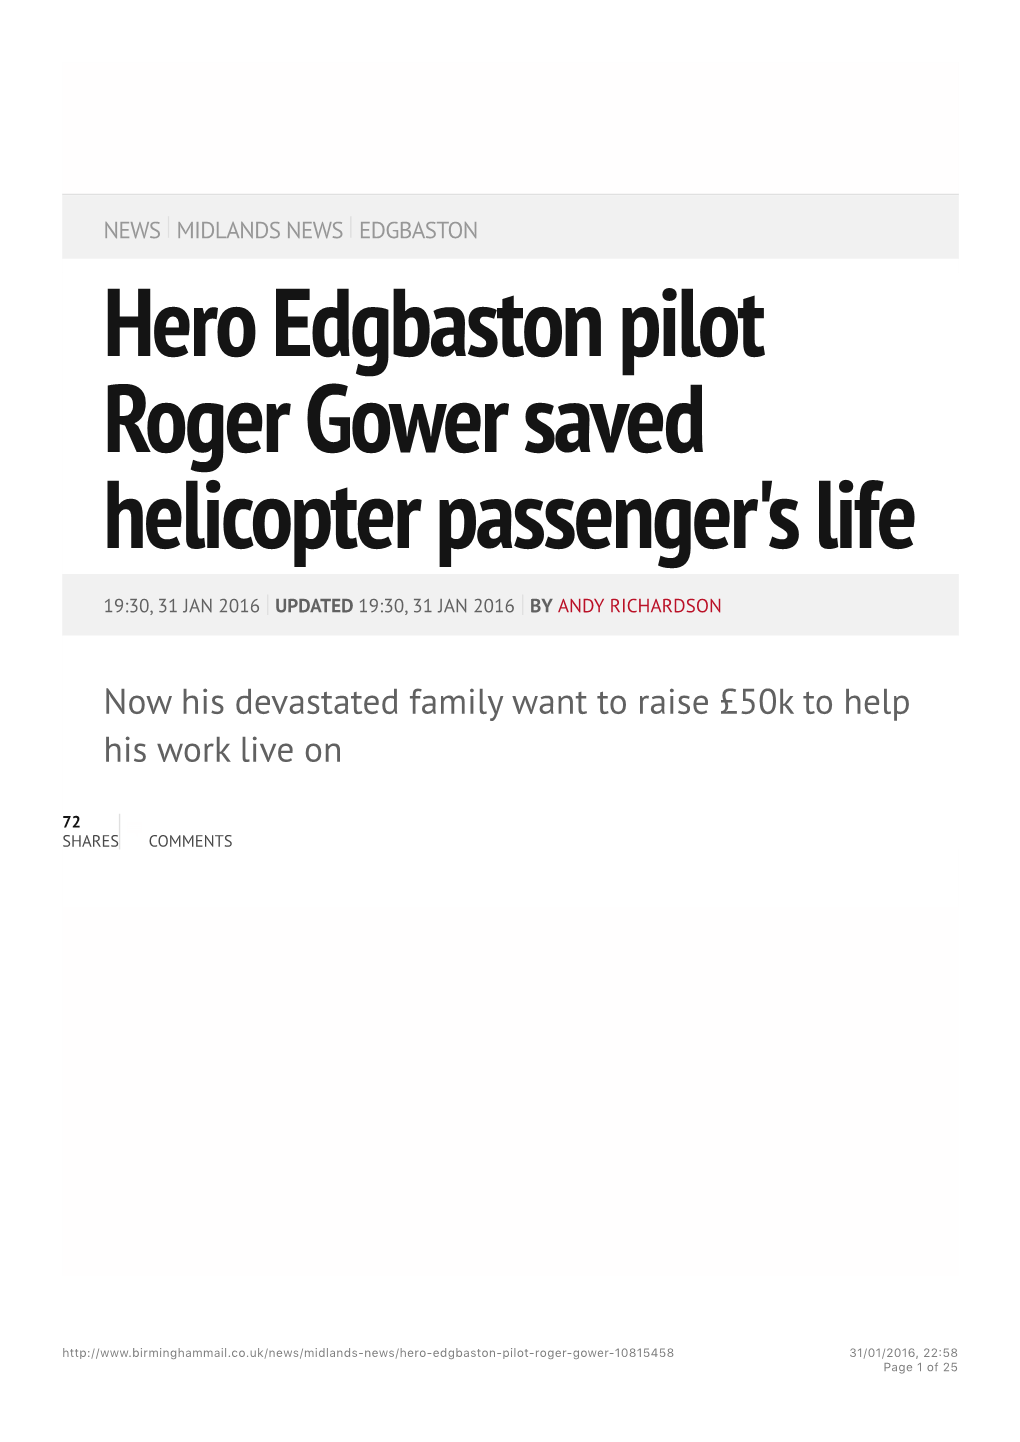 Hero Edgbaston Pilot Roger Gower Saved Helicopter Passenger's Life